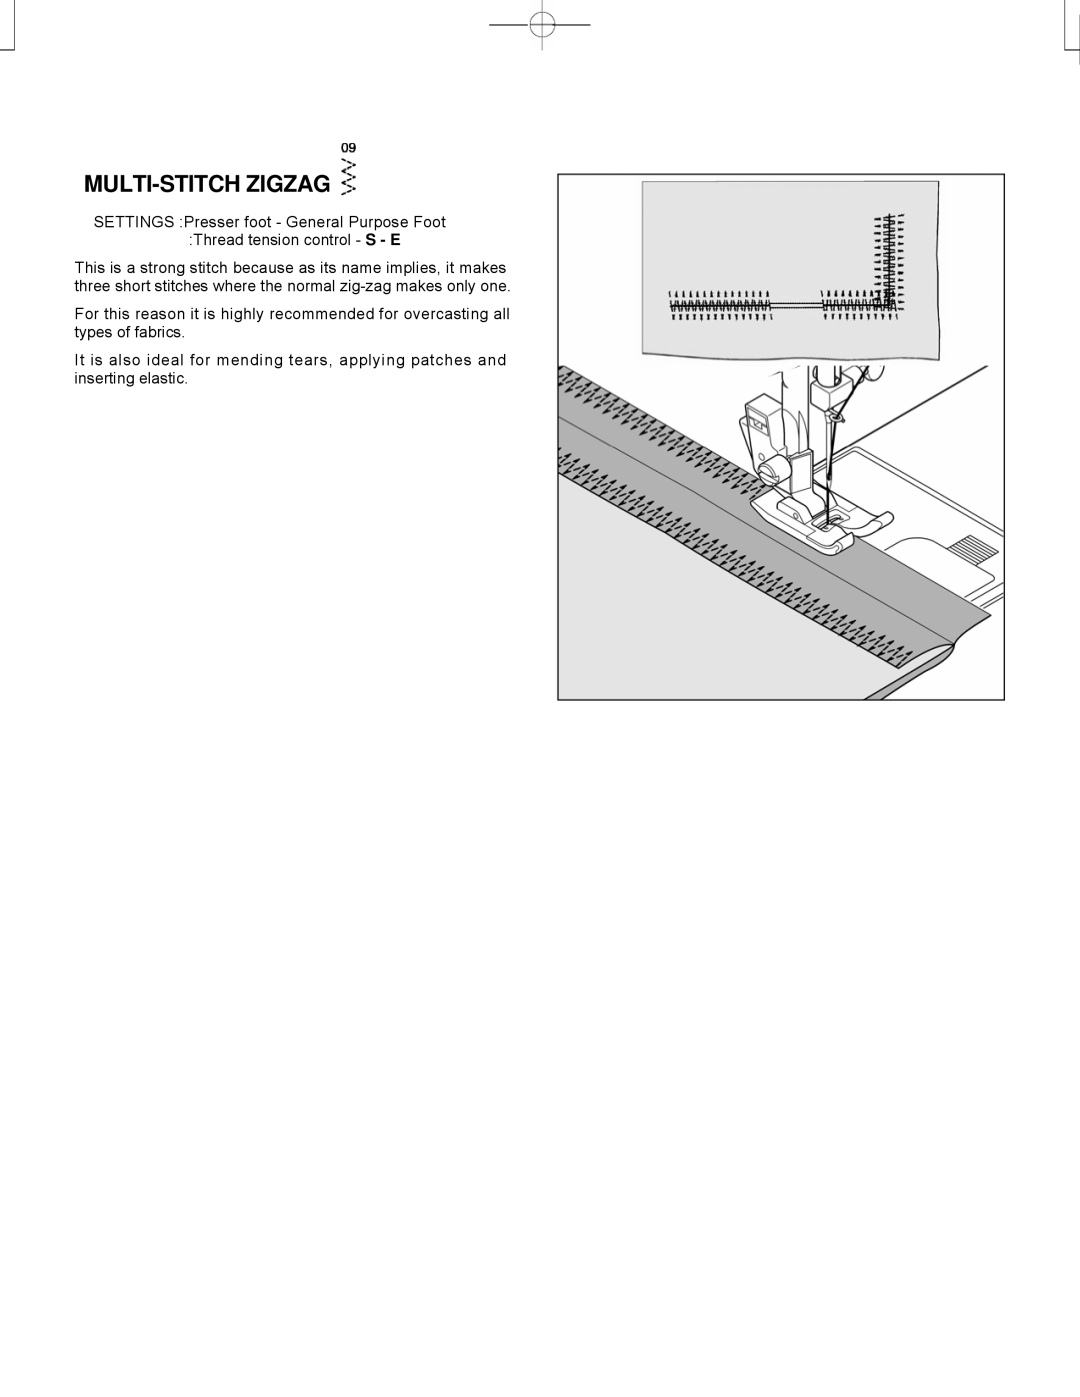 Singer CE-150 instruction manual MULTI-STITCH Zigzag 